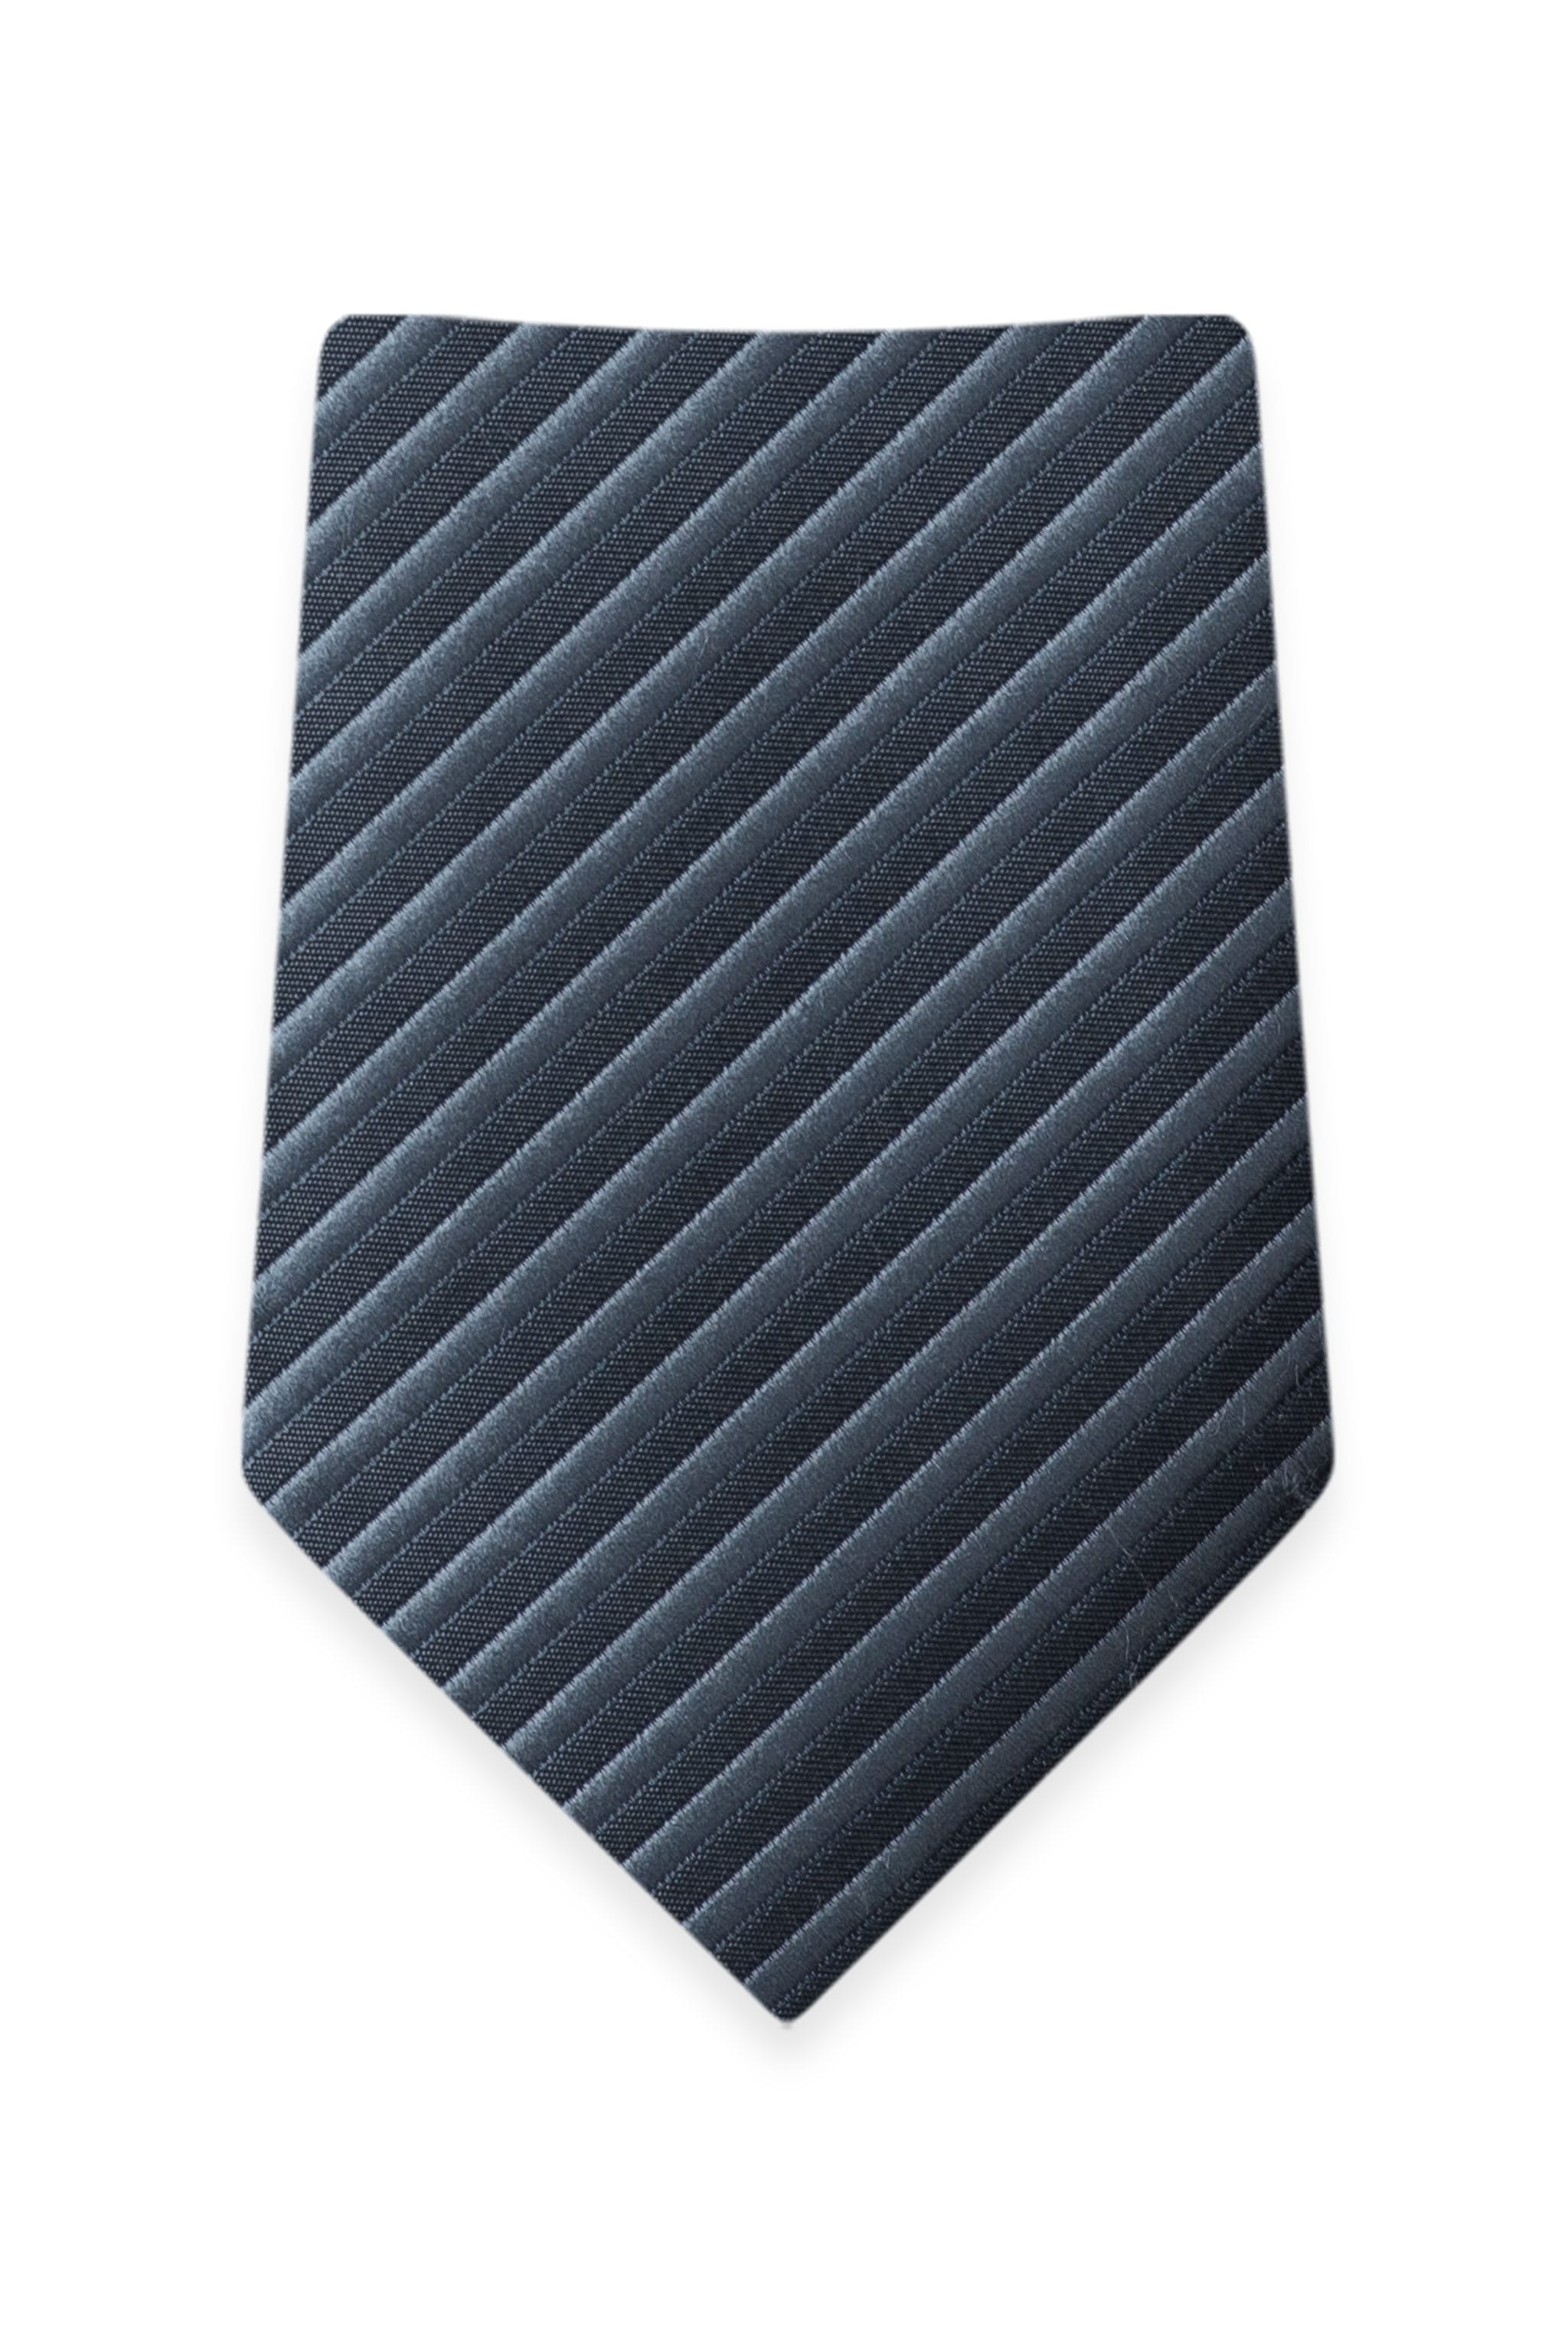 Striped Slate Blue Self-Tie Windsor Tie